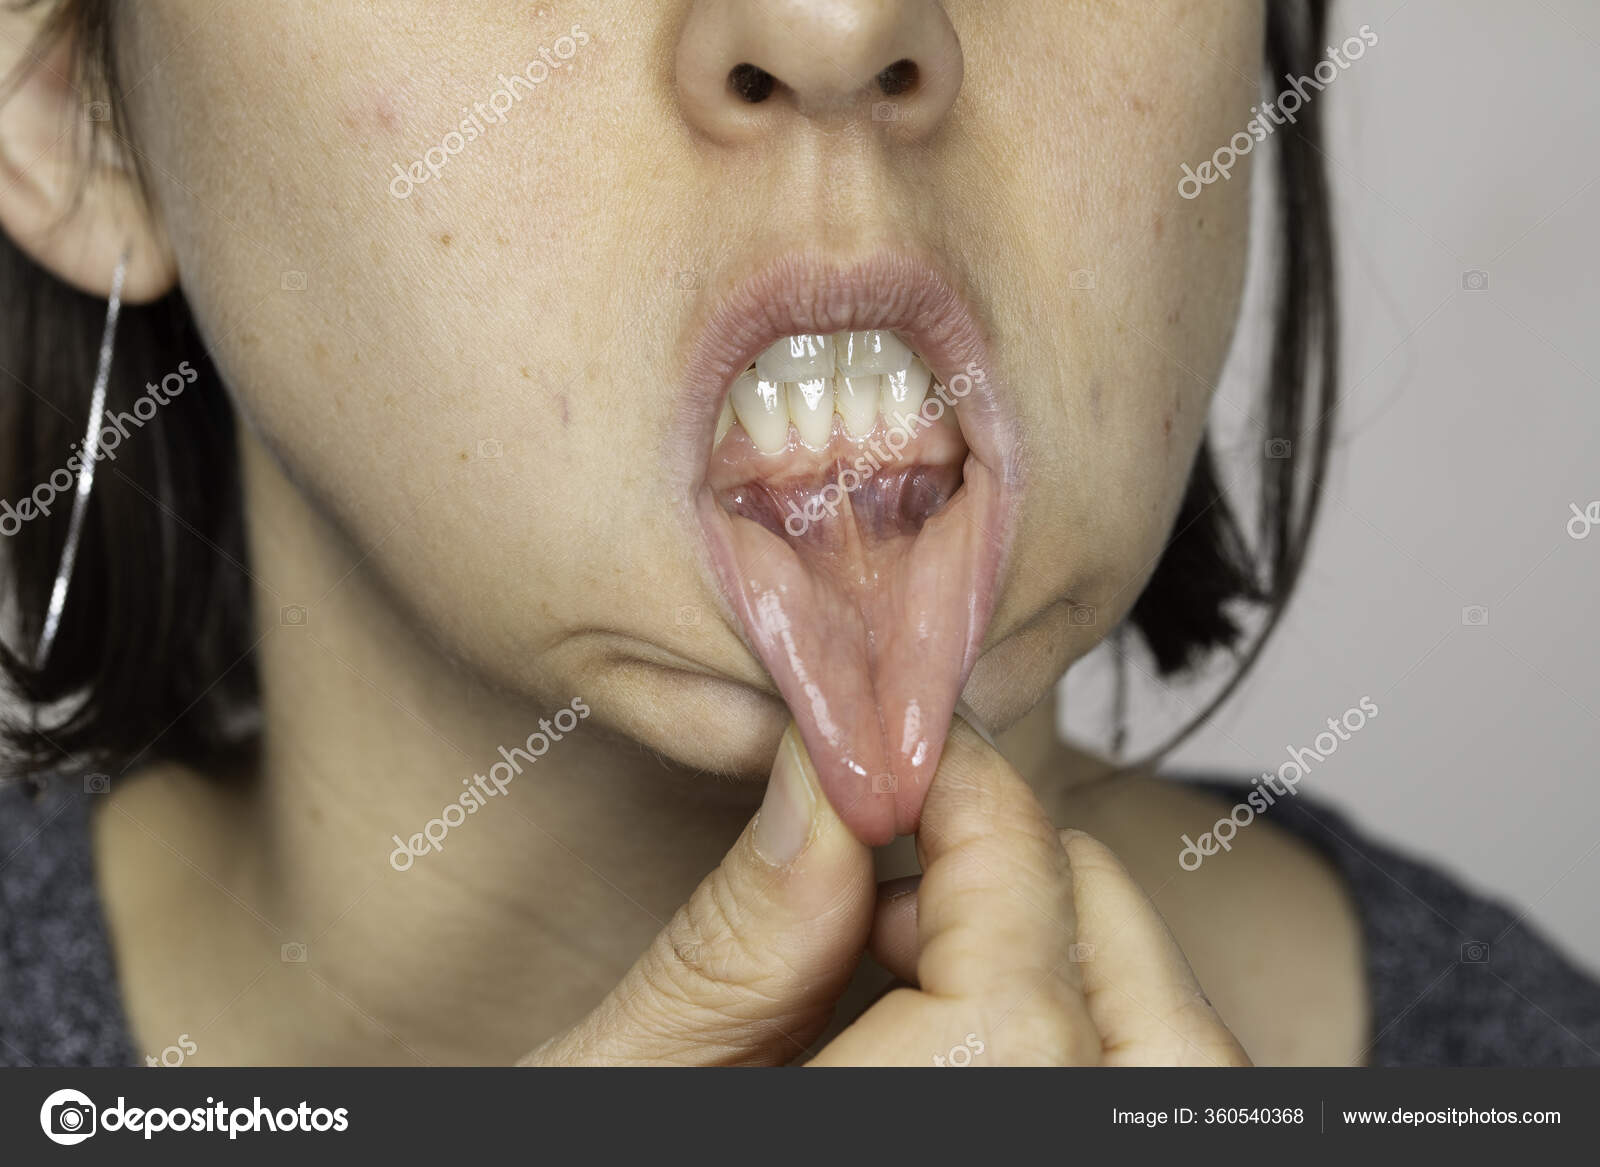 Woman Short Hair Pulling Lower Lip Stock Photo by ©sruilk 360540368